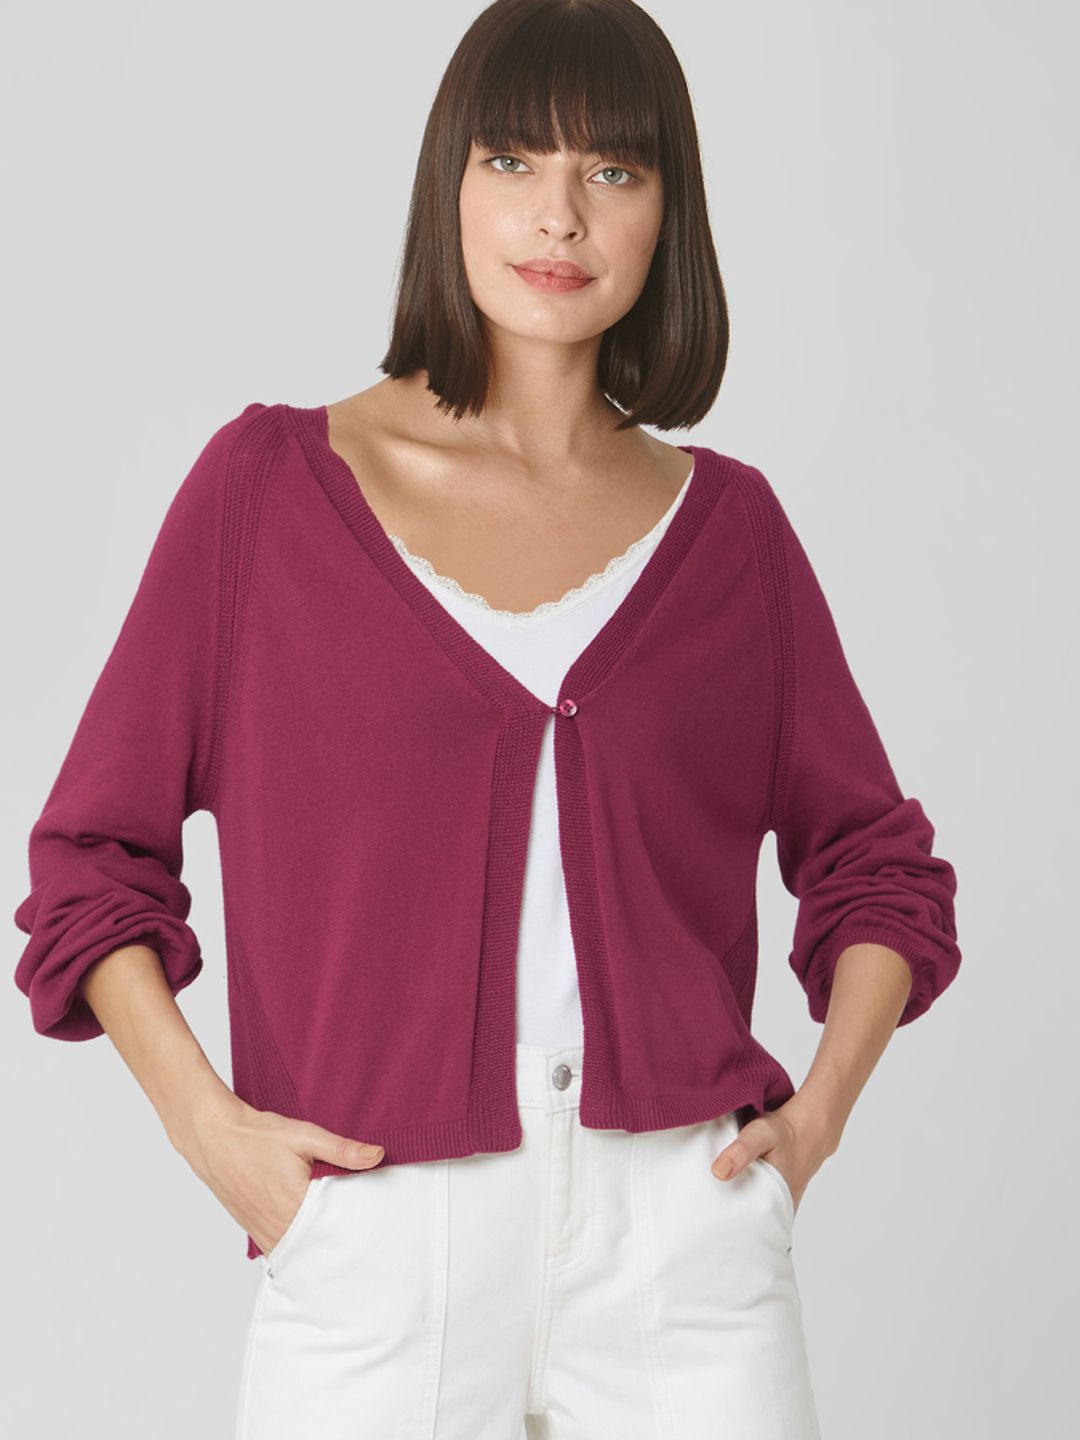 Vero Moda Women Magenta Pink Solid Cardigan Sweater Price in India